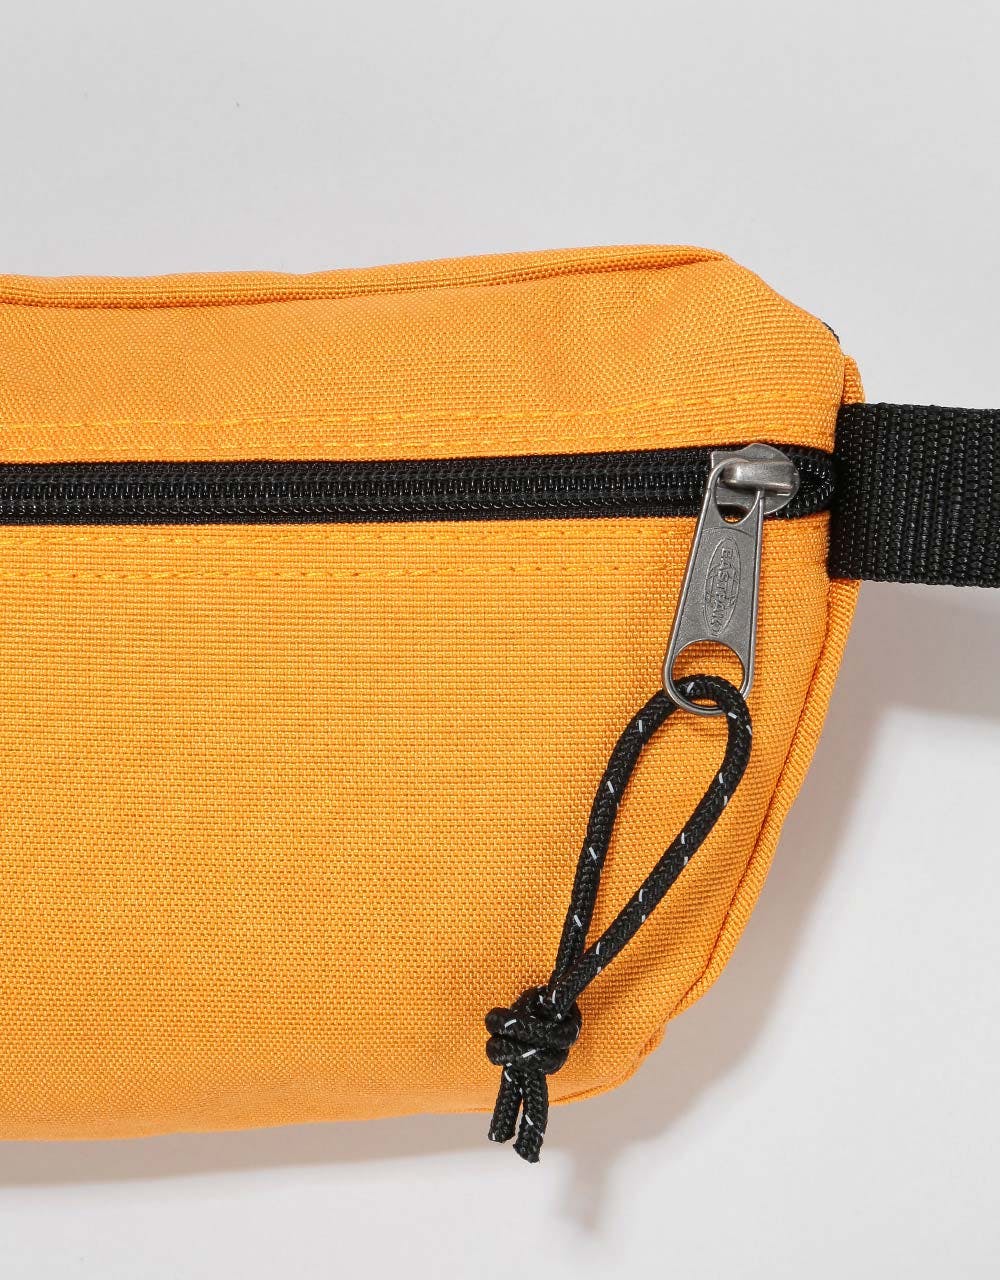 Eastpak Springer Cross Body Bag - Cab Yellow